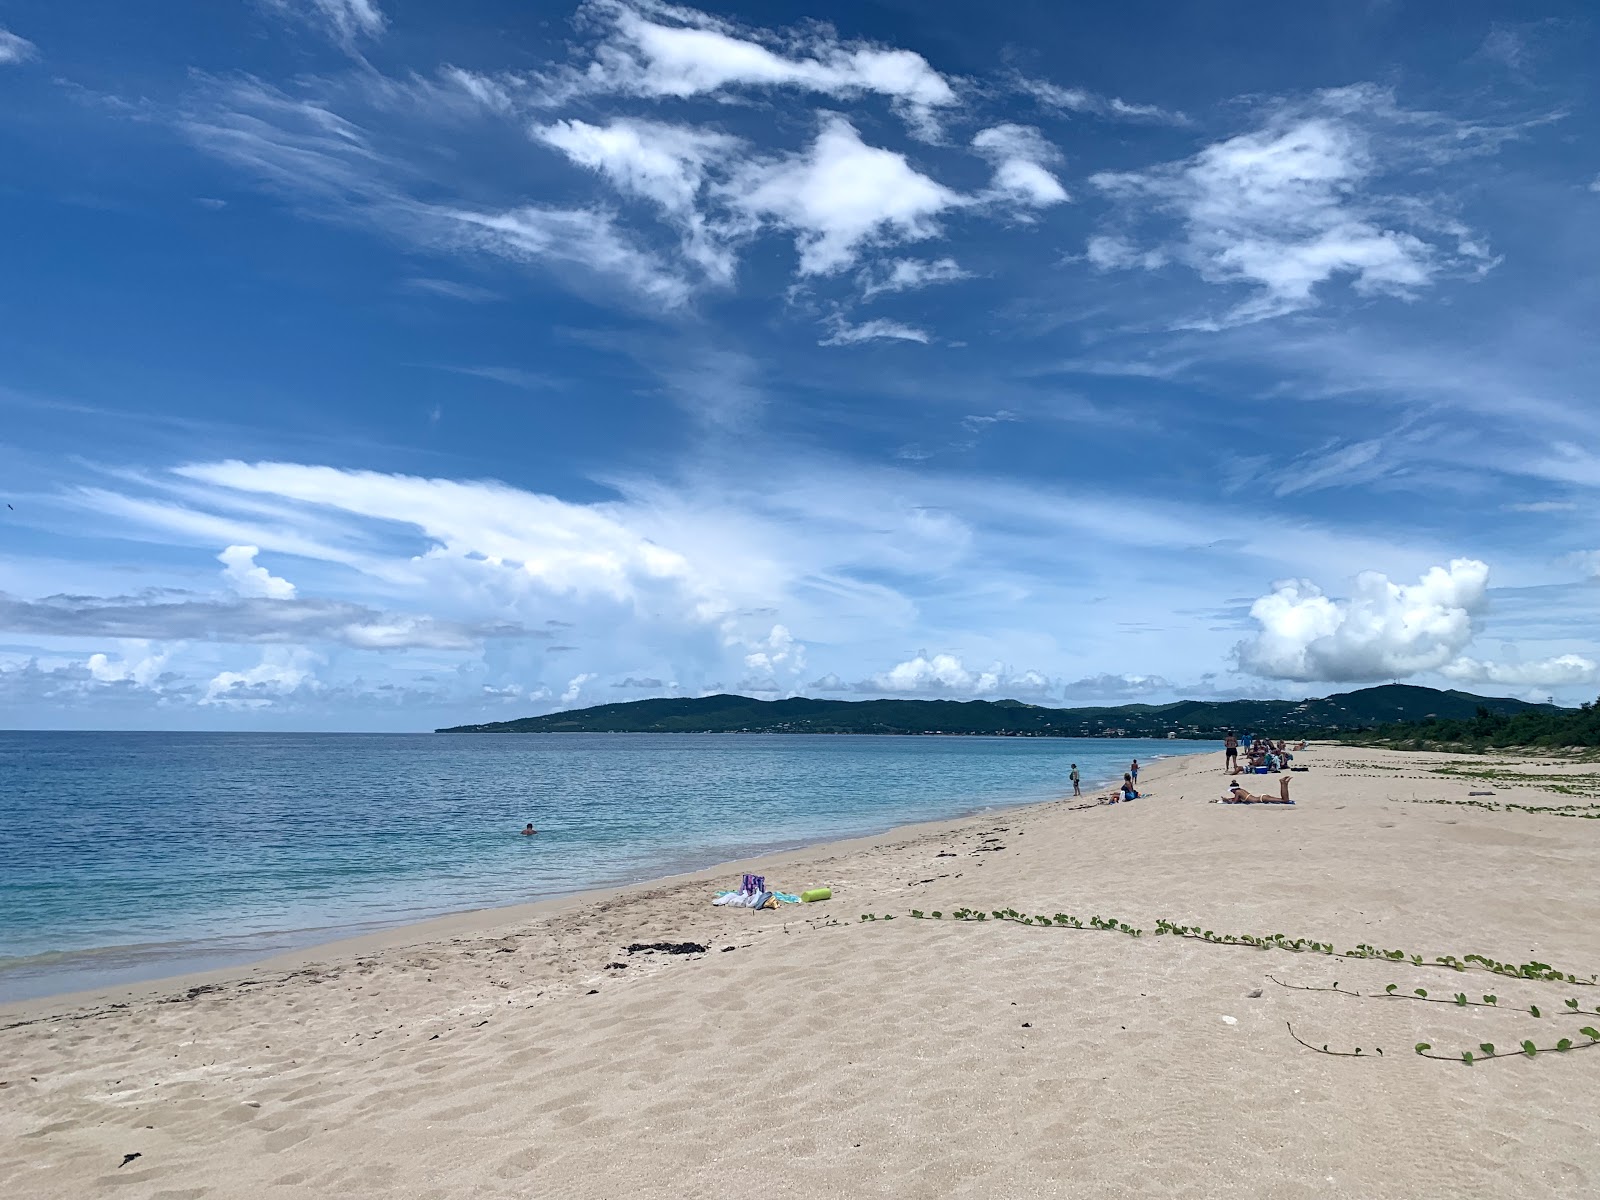 Foto de Sandy Point beach - lugar popular entre os apreciadores de relaxamento